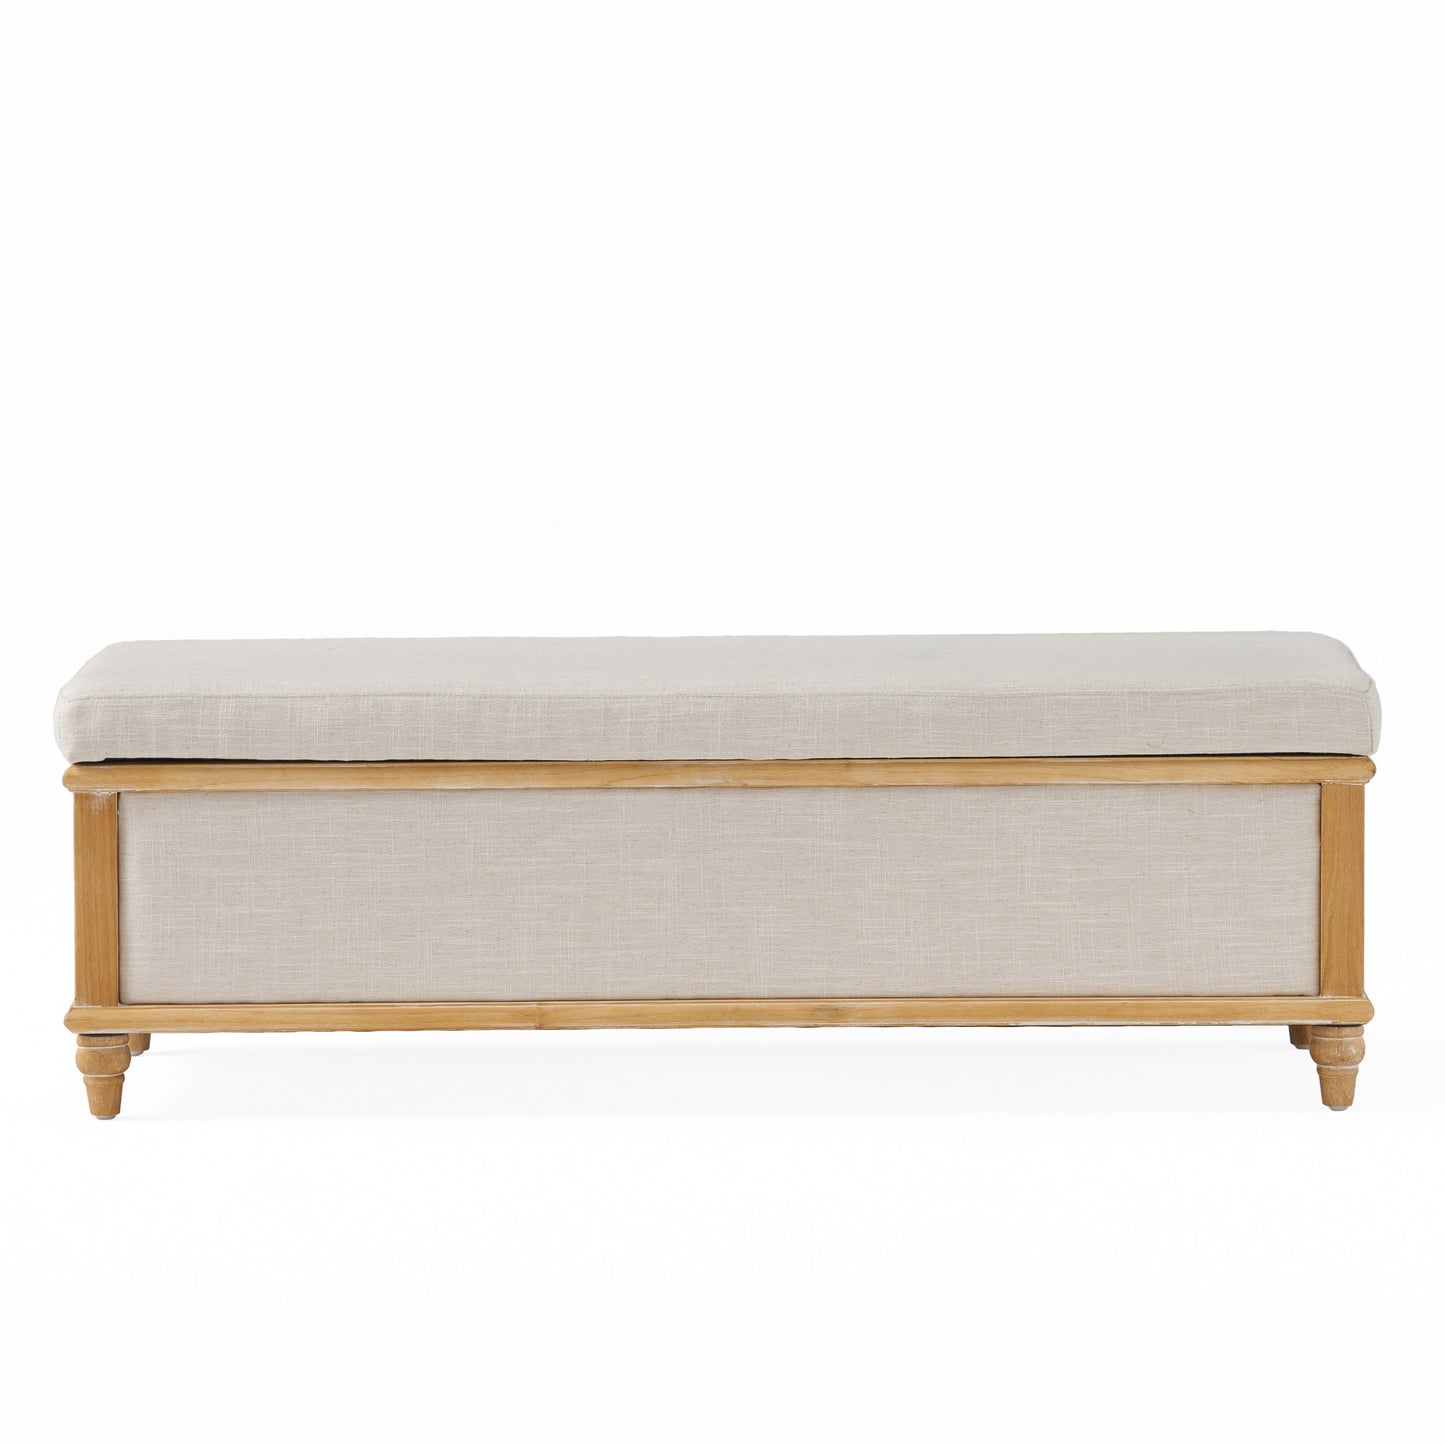 Lombardi French Style Upholstered Light Beige Fabric Storage Ottoman